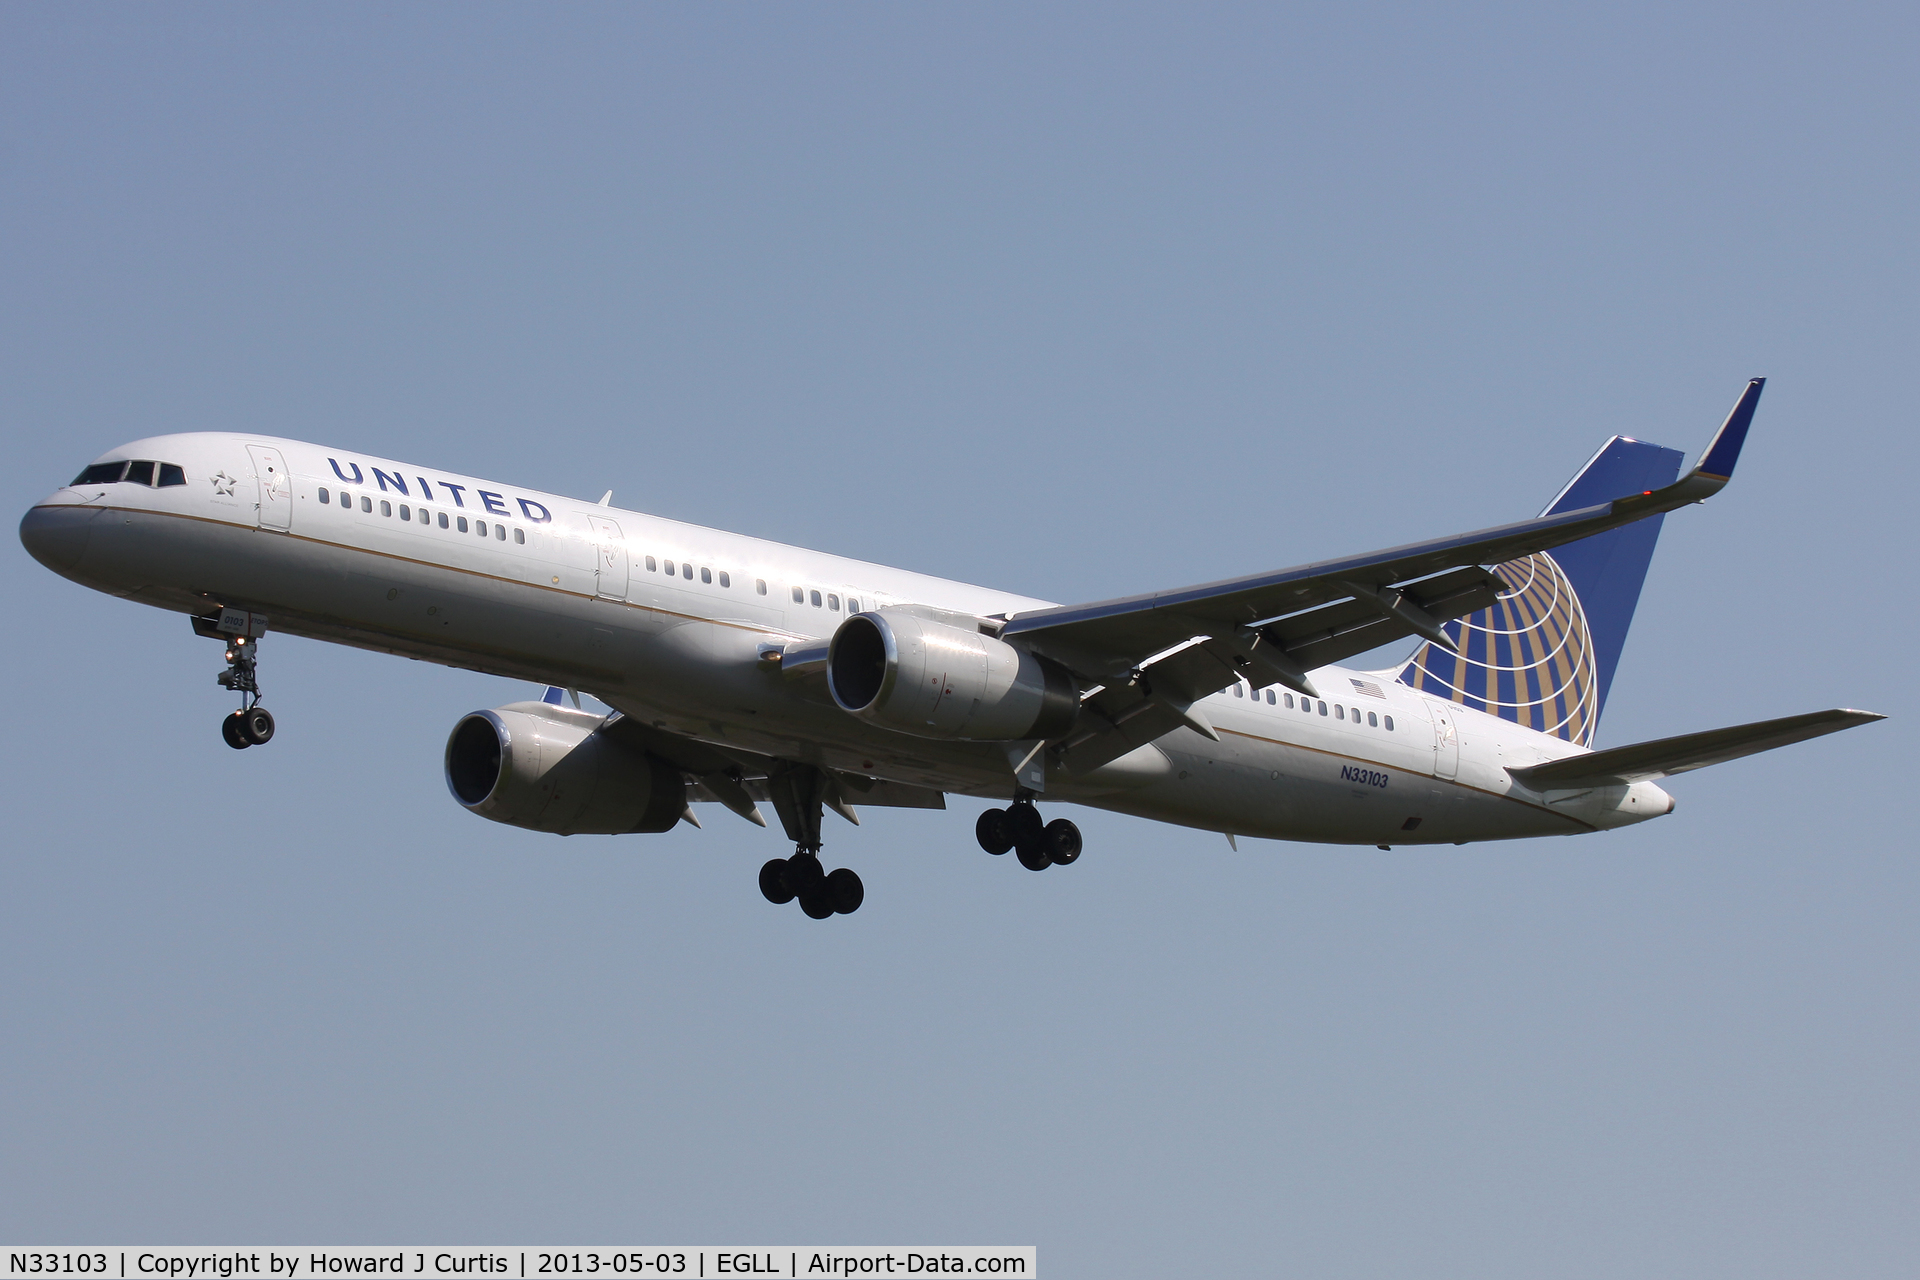 N33103, 1994 Boeing 757-224 C/N 27293, United Airlines, on approach to runway 27L.